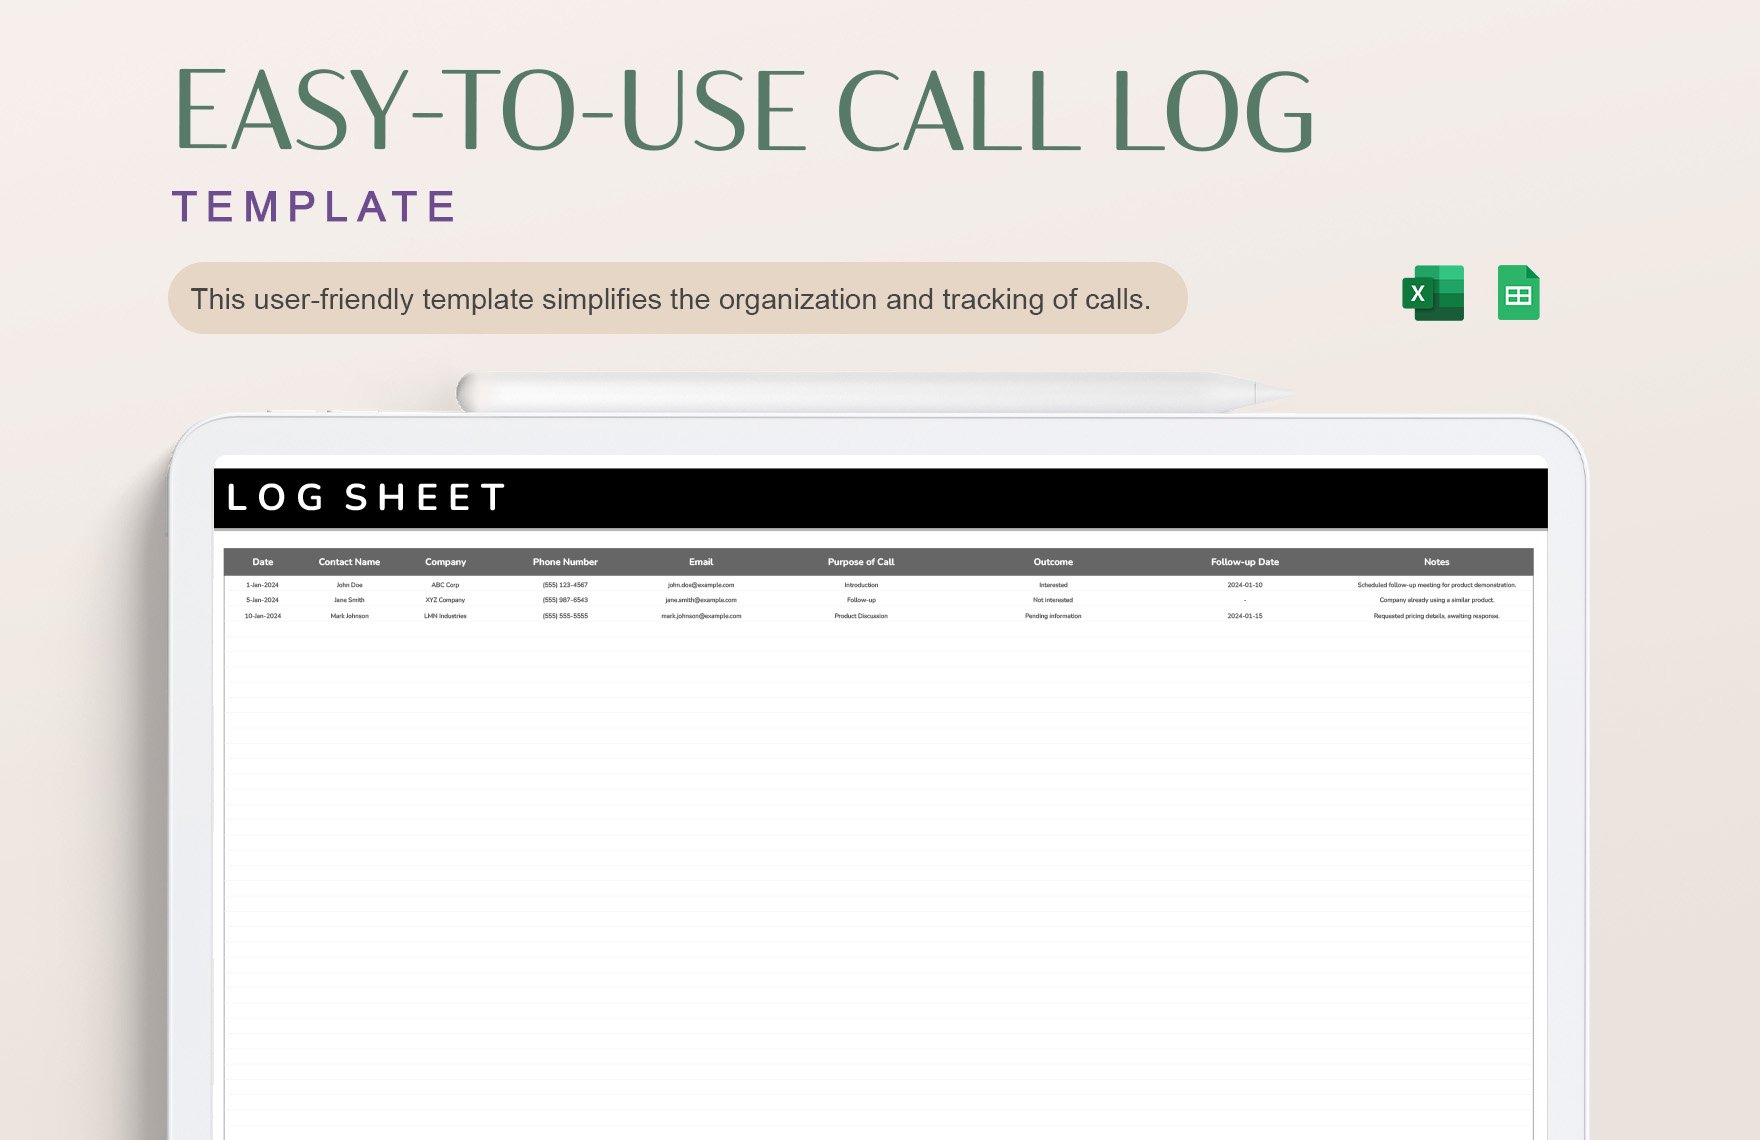 Easy-to-Use Call Log Template